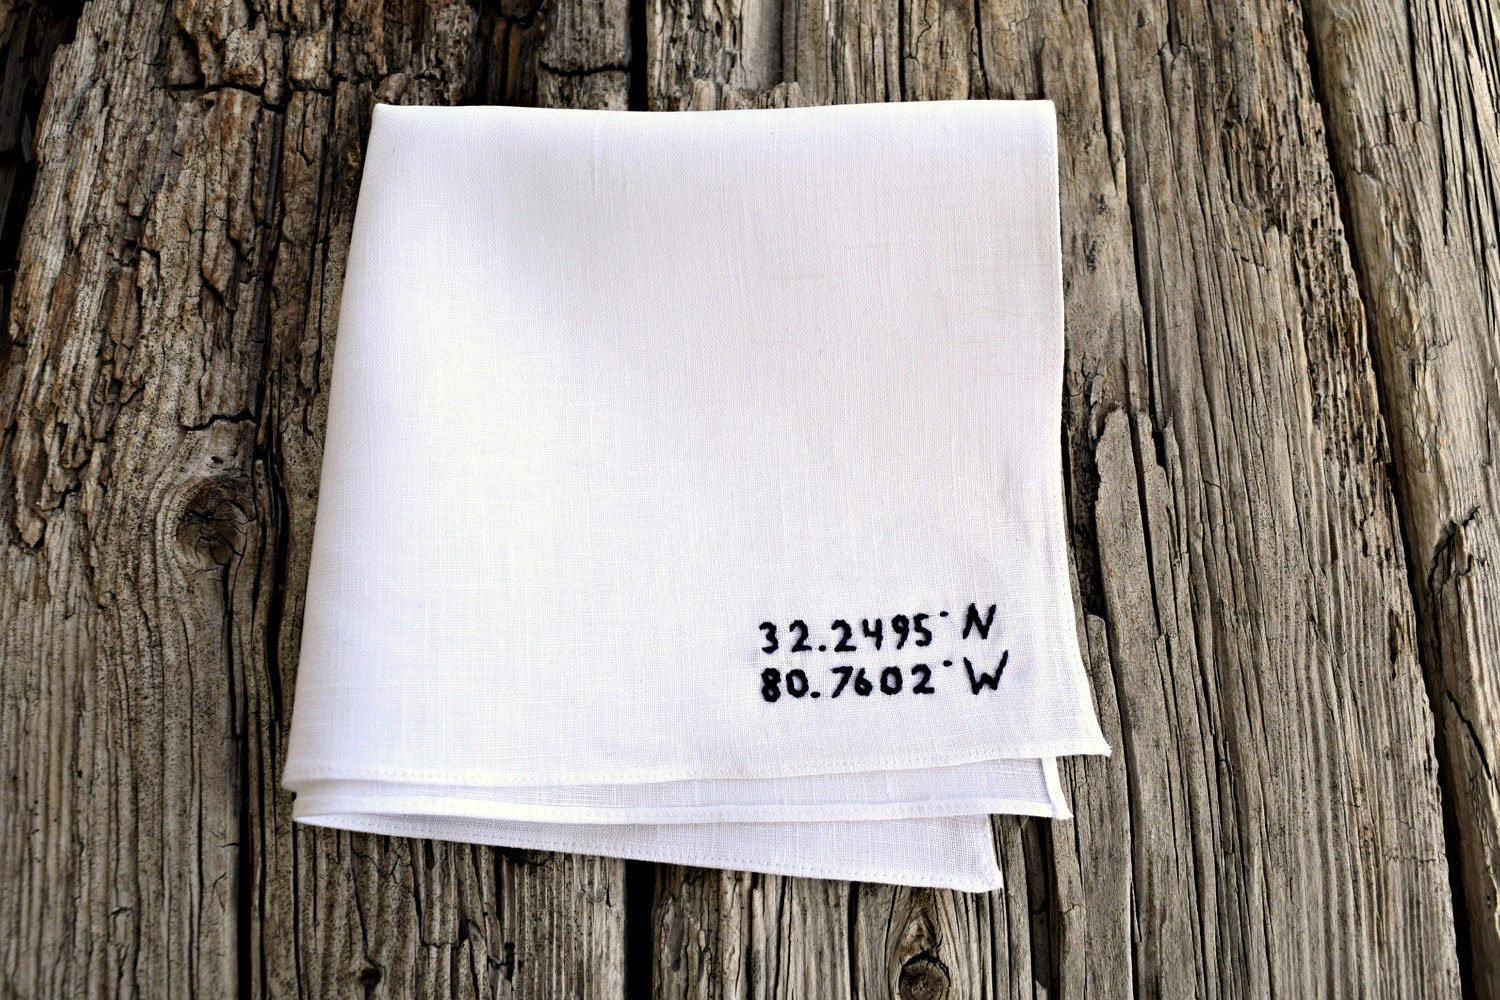 Hand embroidered Irish linen handkerchief with coordinates